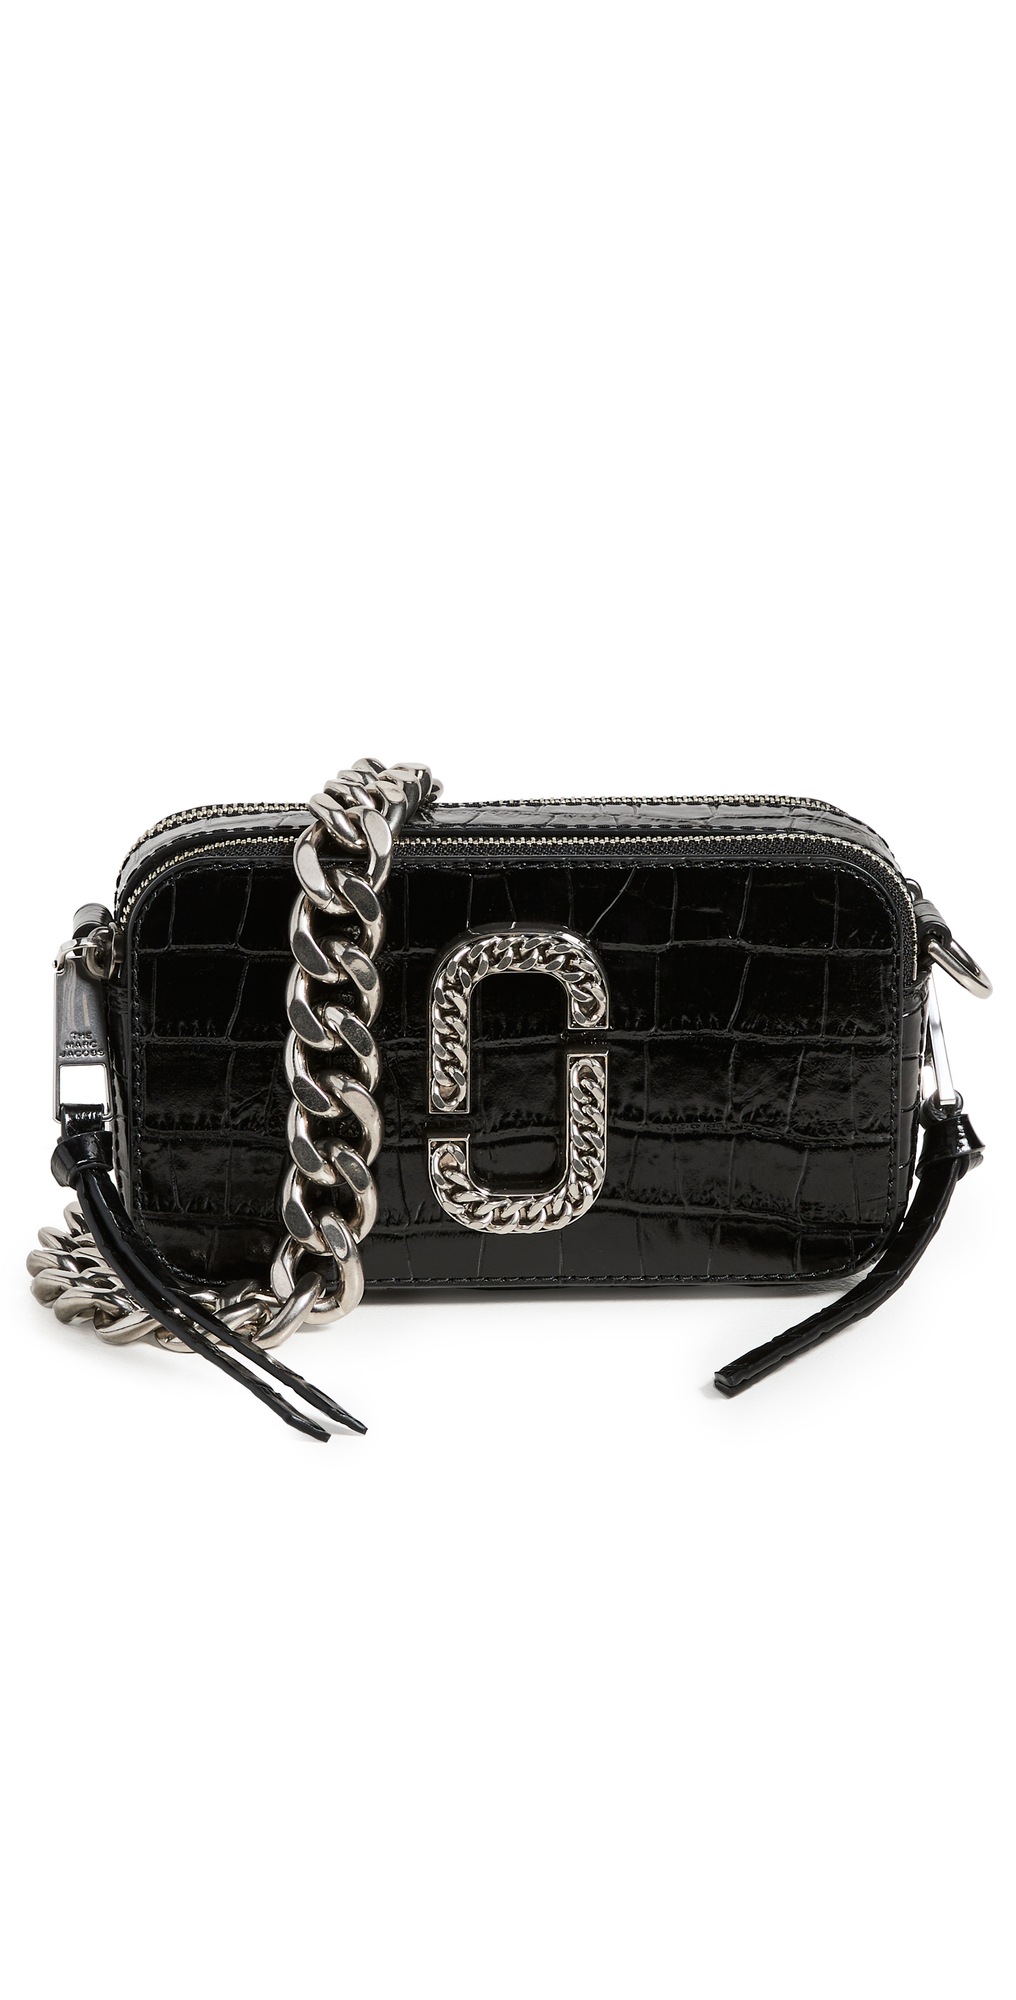 Marc Jacobs Snapshot Croc Embossed Camera Bag in black